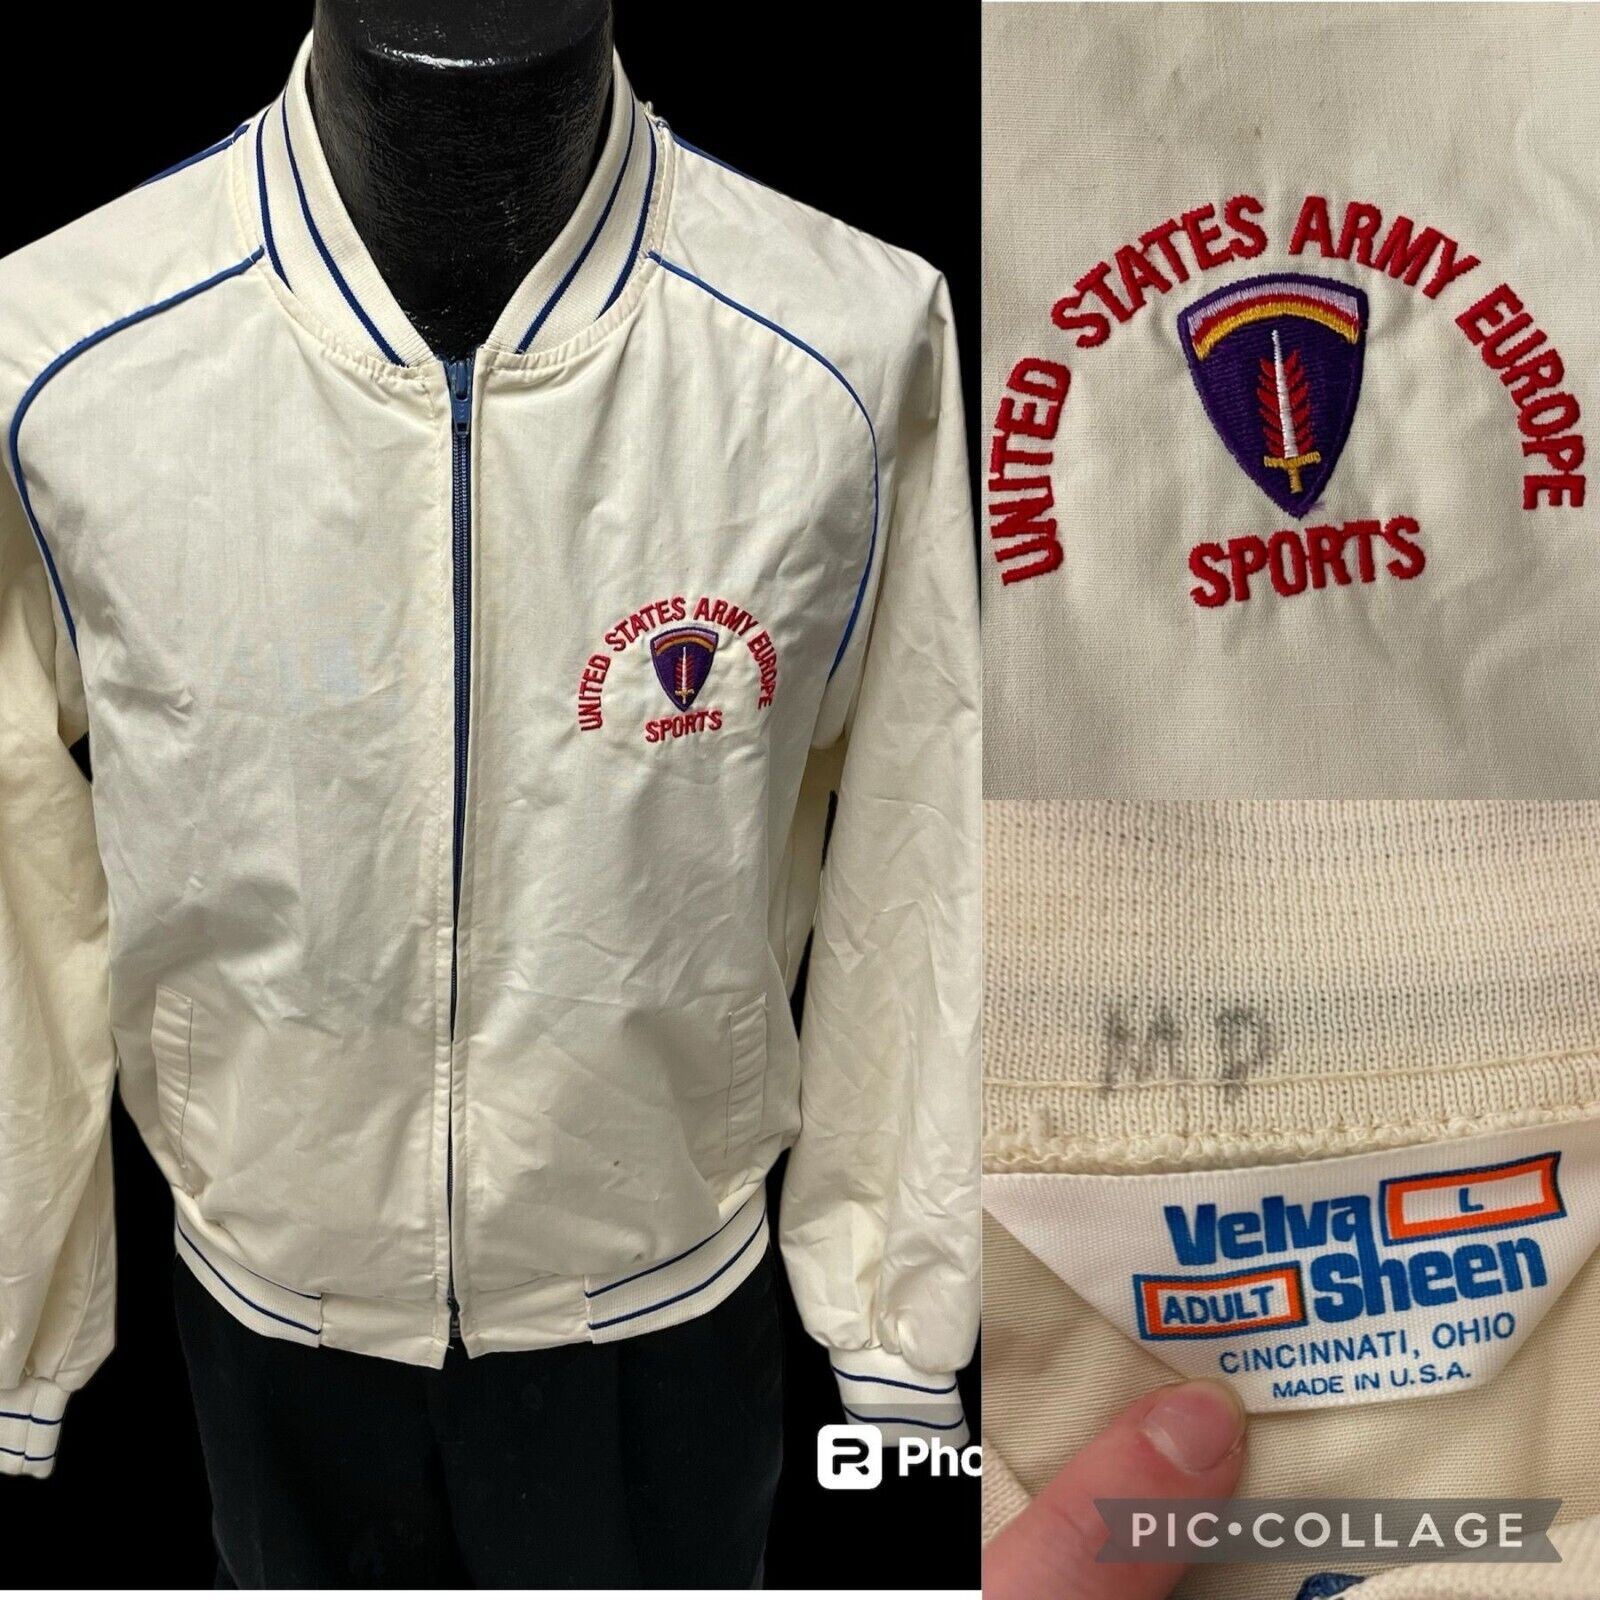 Vtg 70's Velva Sheen USA White Blue Stadium Coat US ARMY SPORTS Europe Jacket L